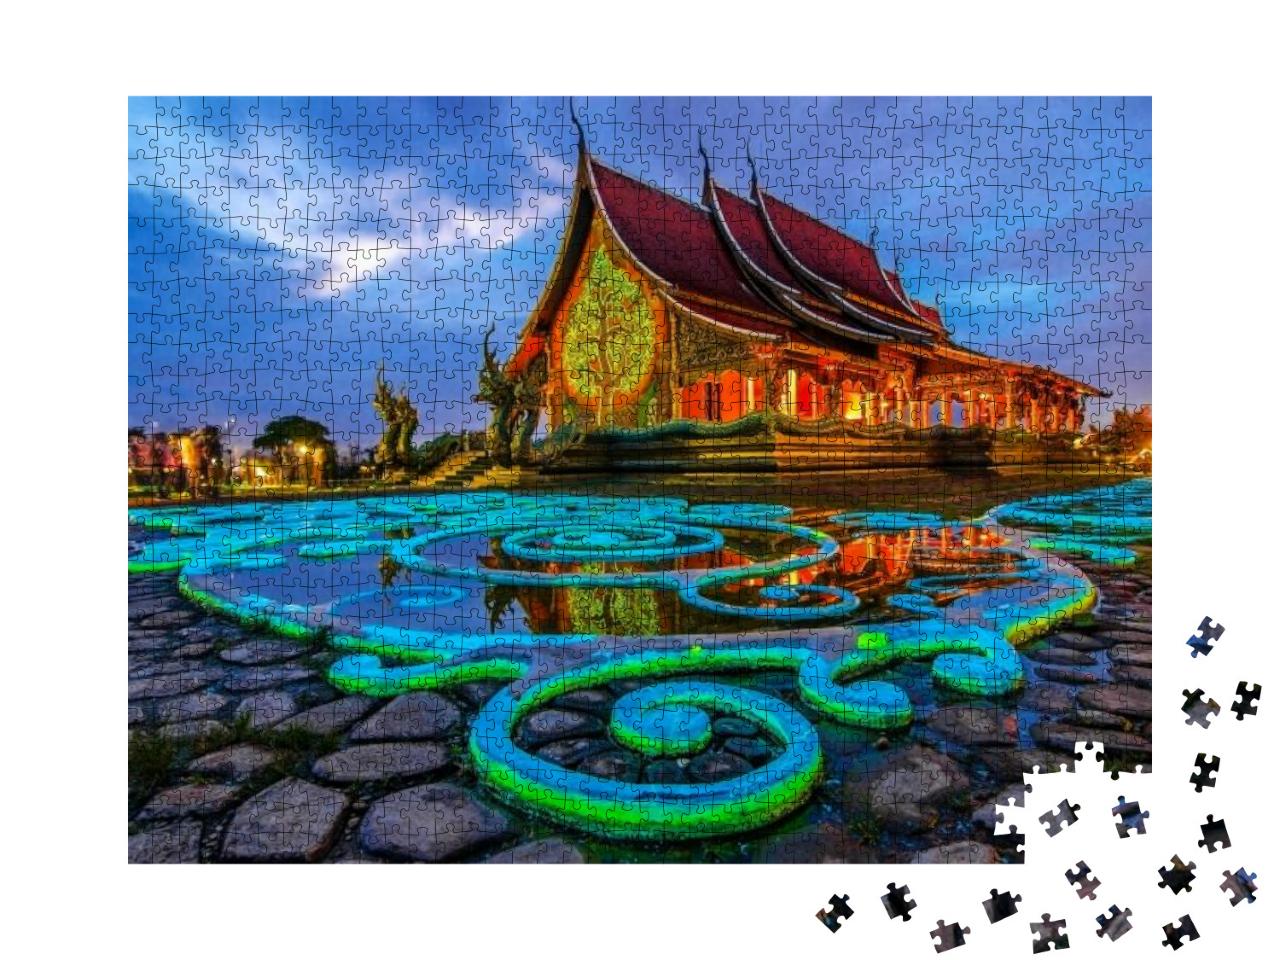 Sirindhorn Wararam Phu Prao is Public Temple Wat Phu Prao... Jigsaw Puzzle with 1000 pieces